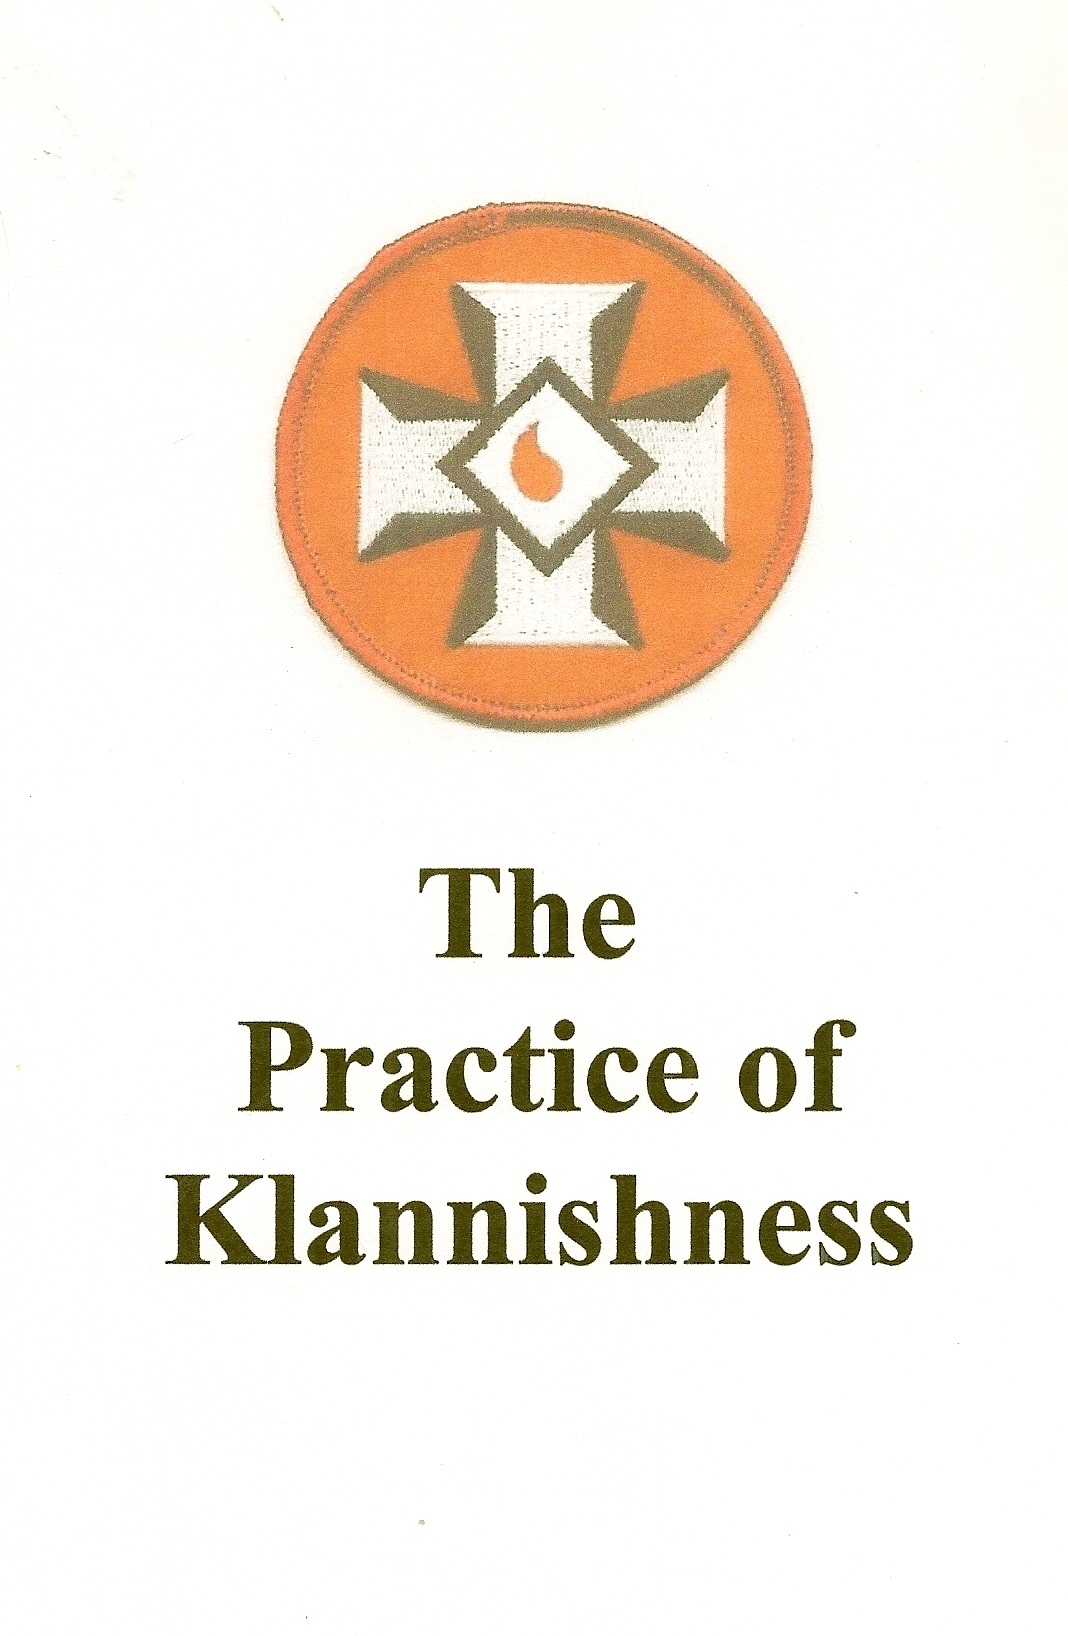 The Practice of Klannishness